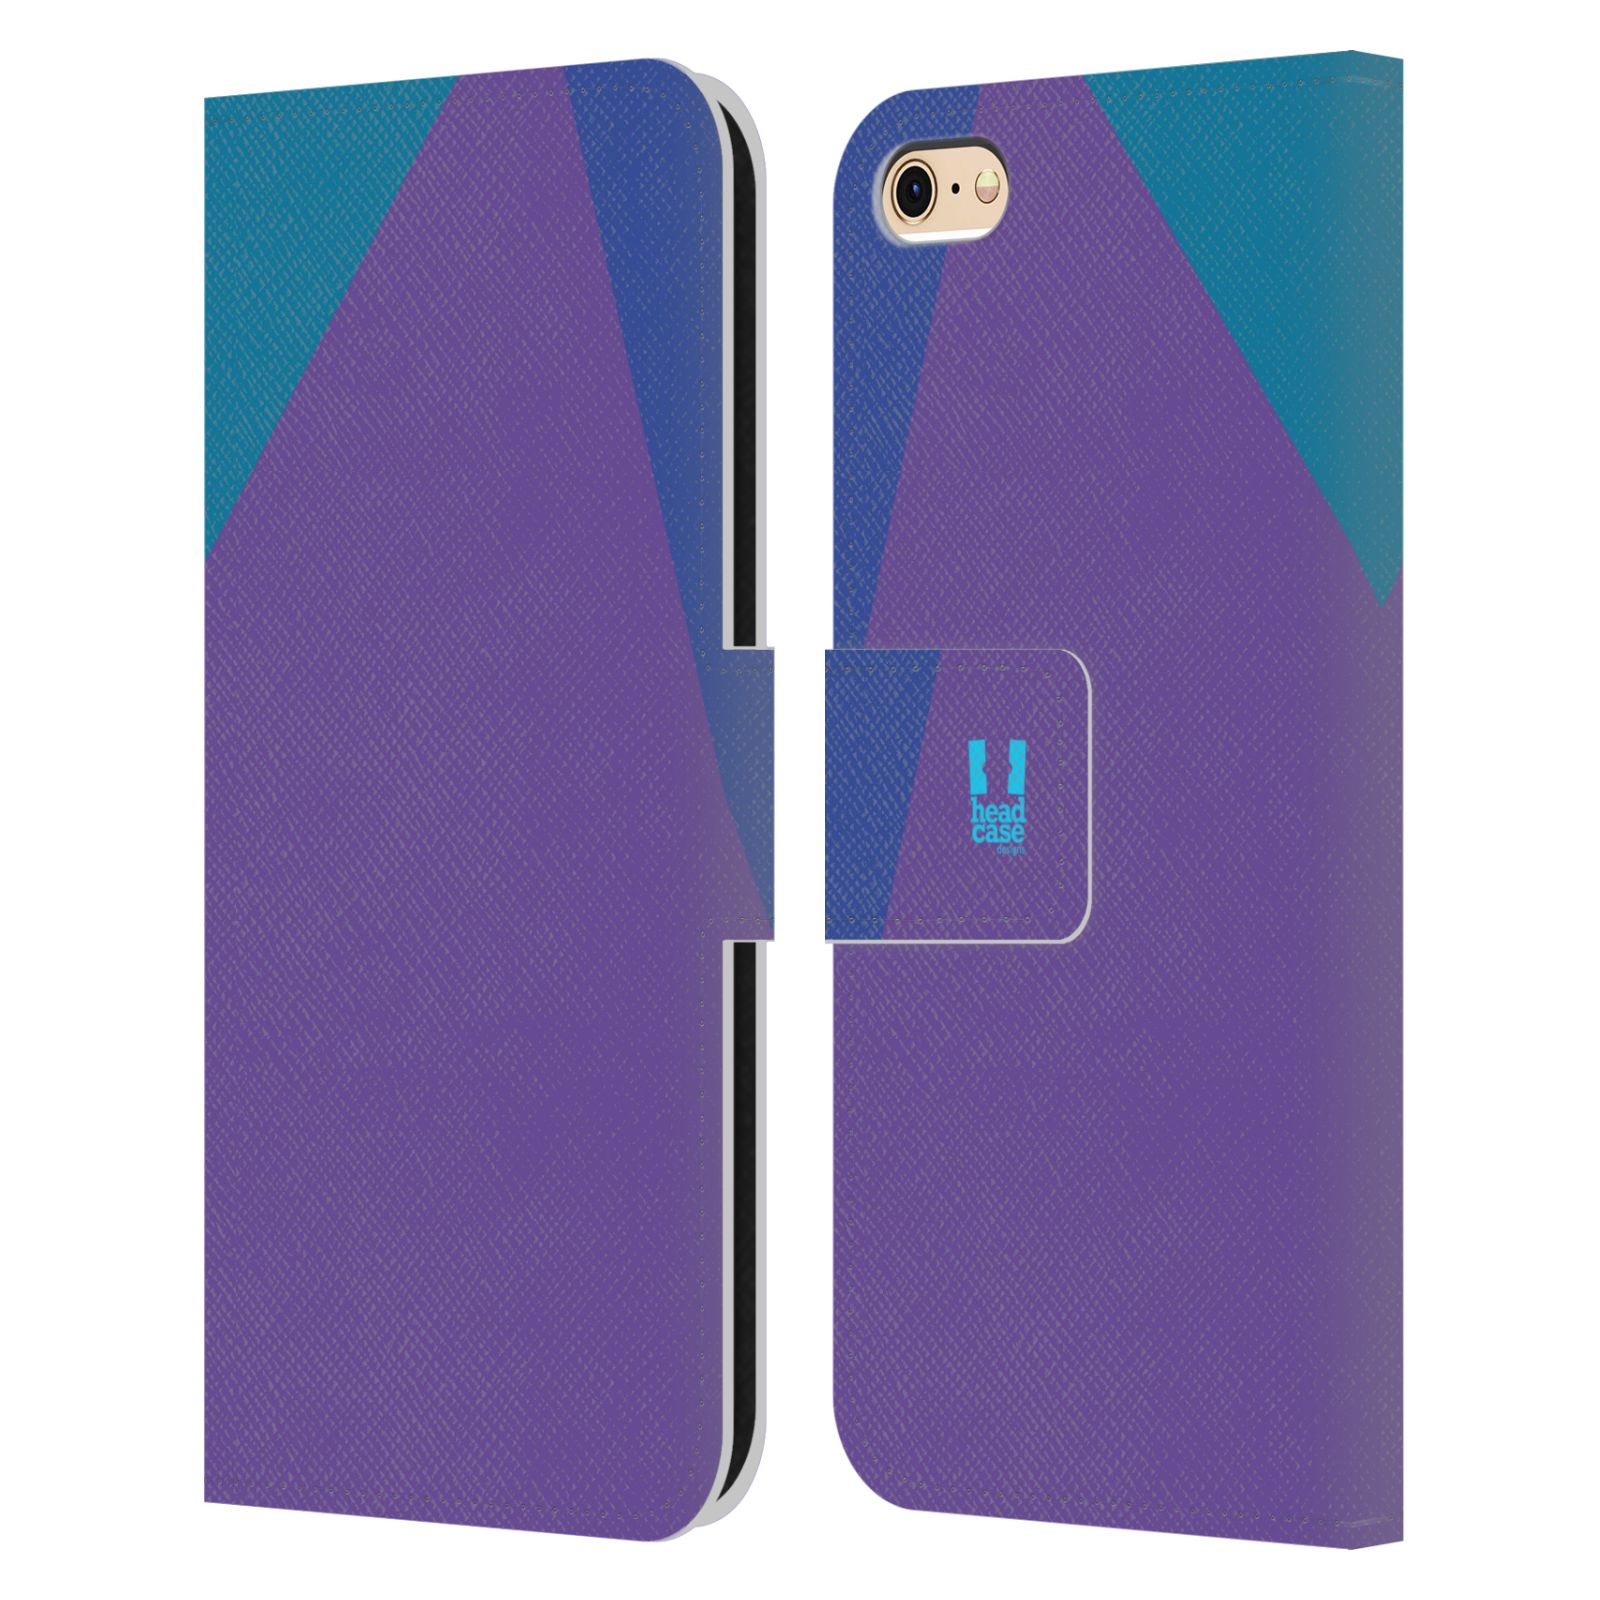 HEAD CASE Flipové pouzdro pro mobil Apple Iphone 6/6s barevné tvary fialová feminine